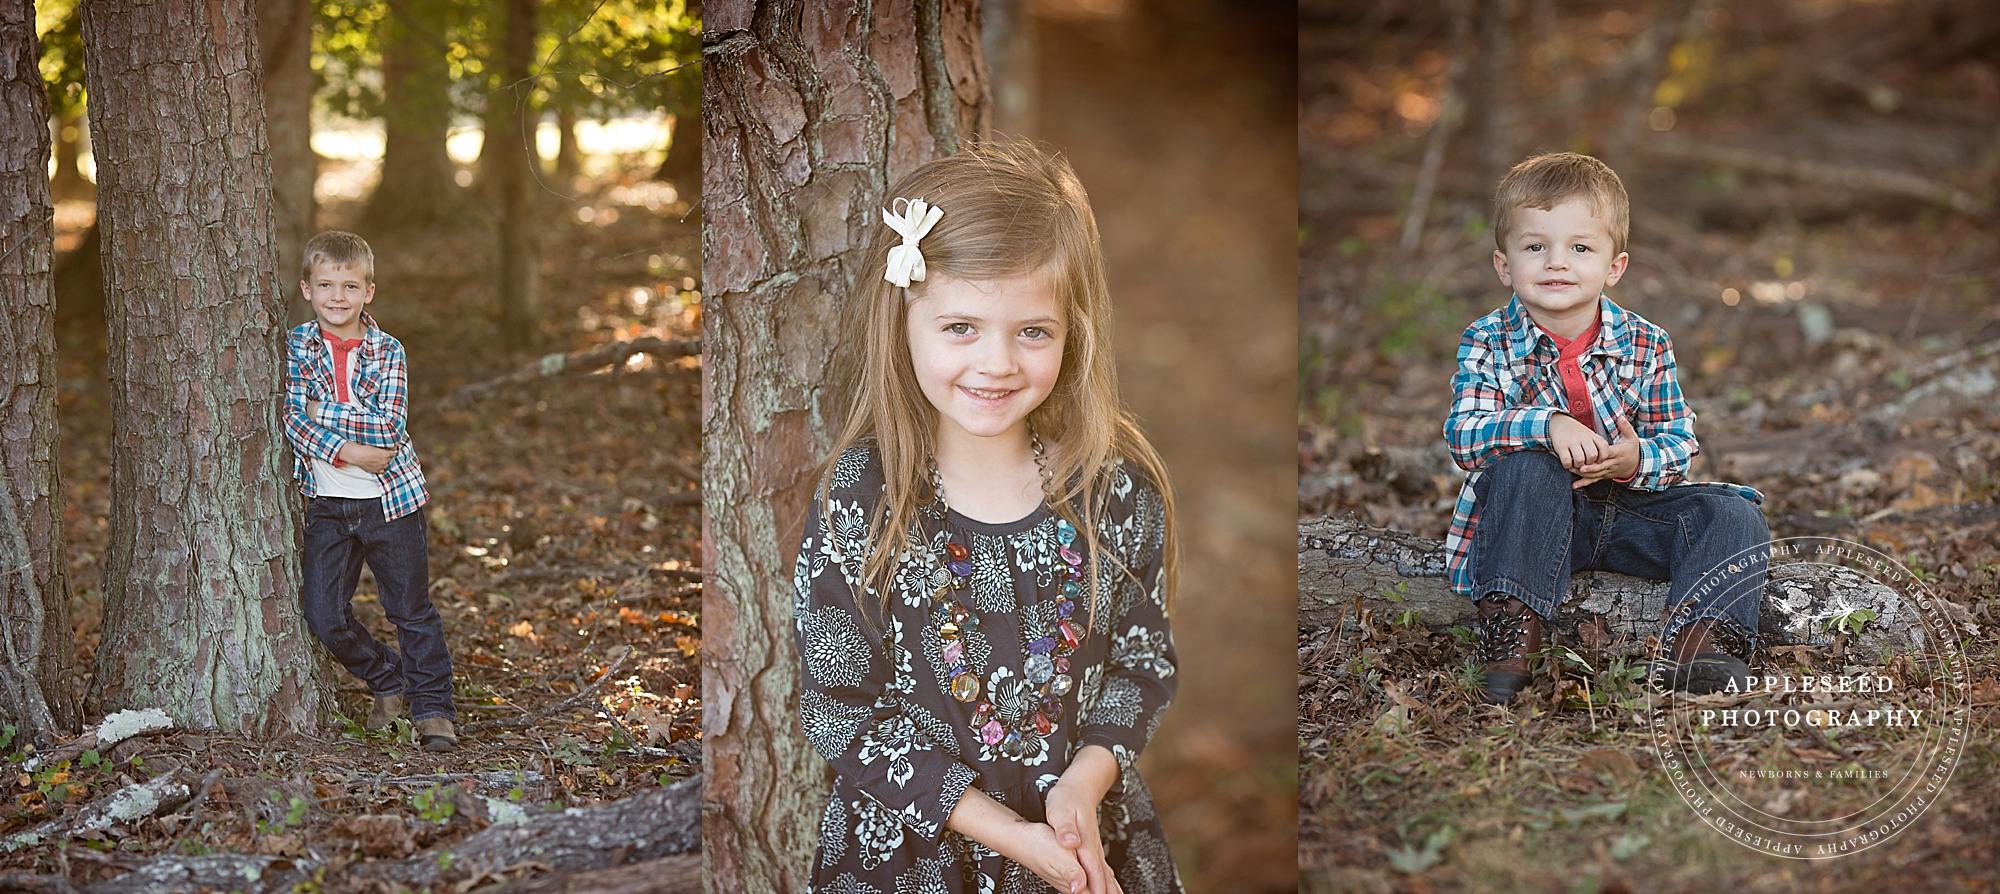 Marietta Family Photographer| Fall Mini Session | Appleseed Photography